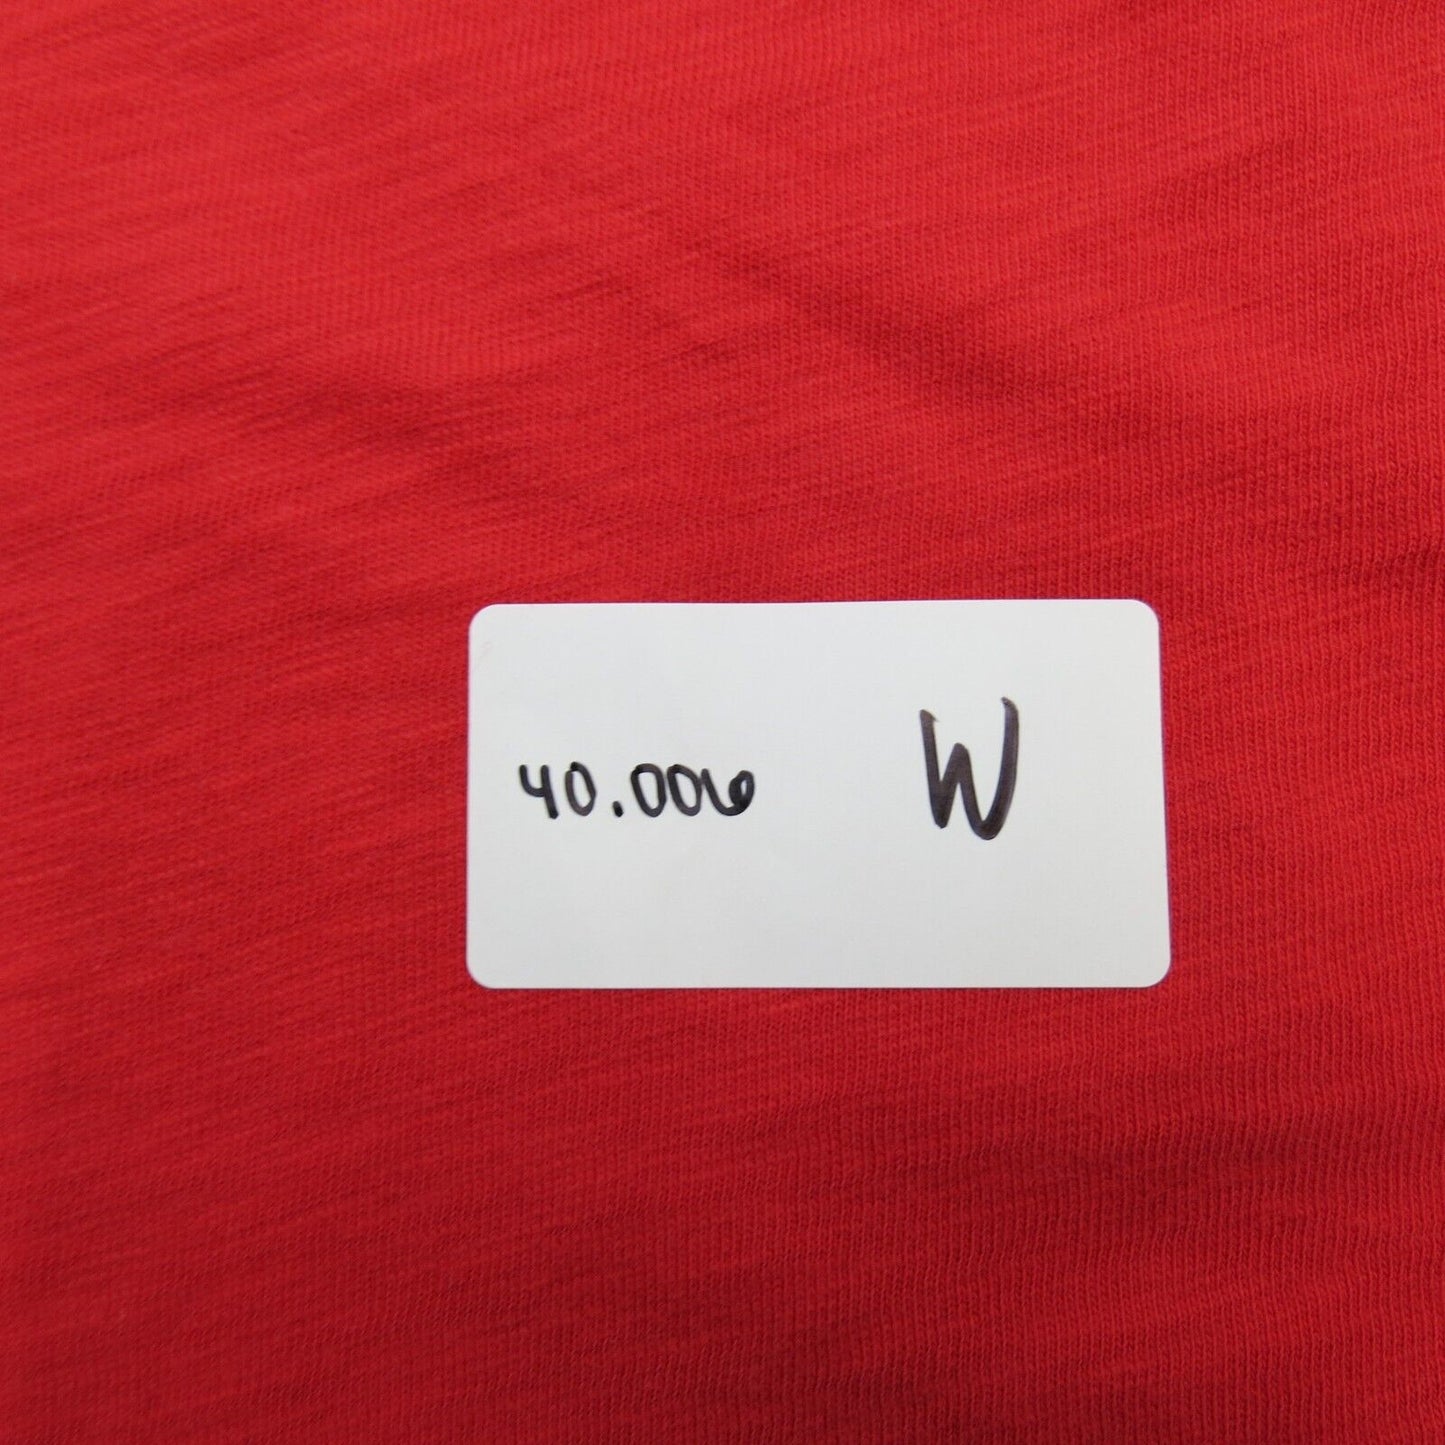 J. Crew Studio Tee Shirt Top Short Sleeves Crew Neck 100% Cotton Red Size M